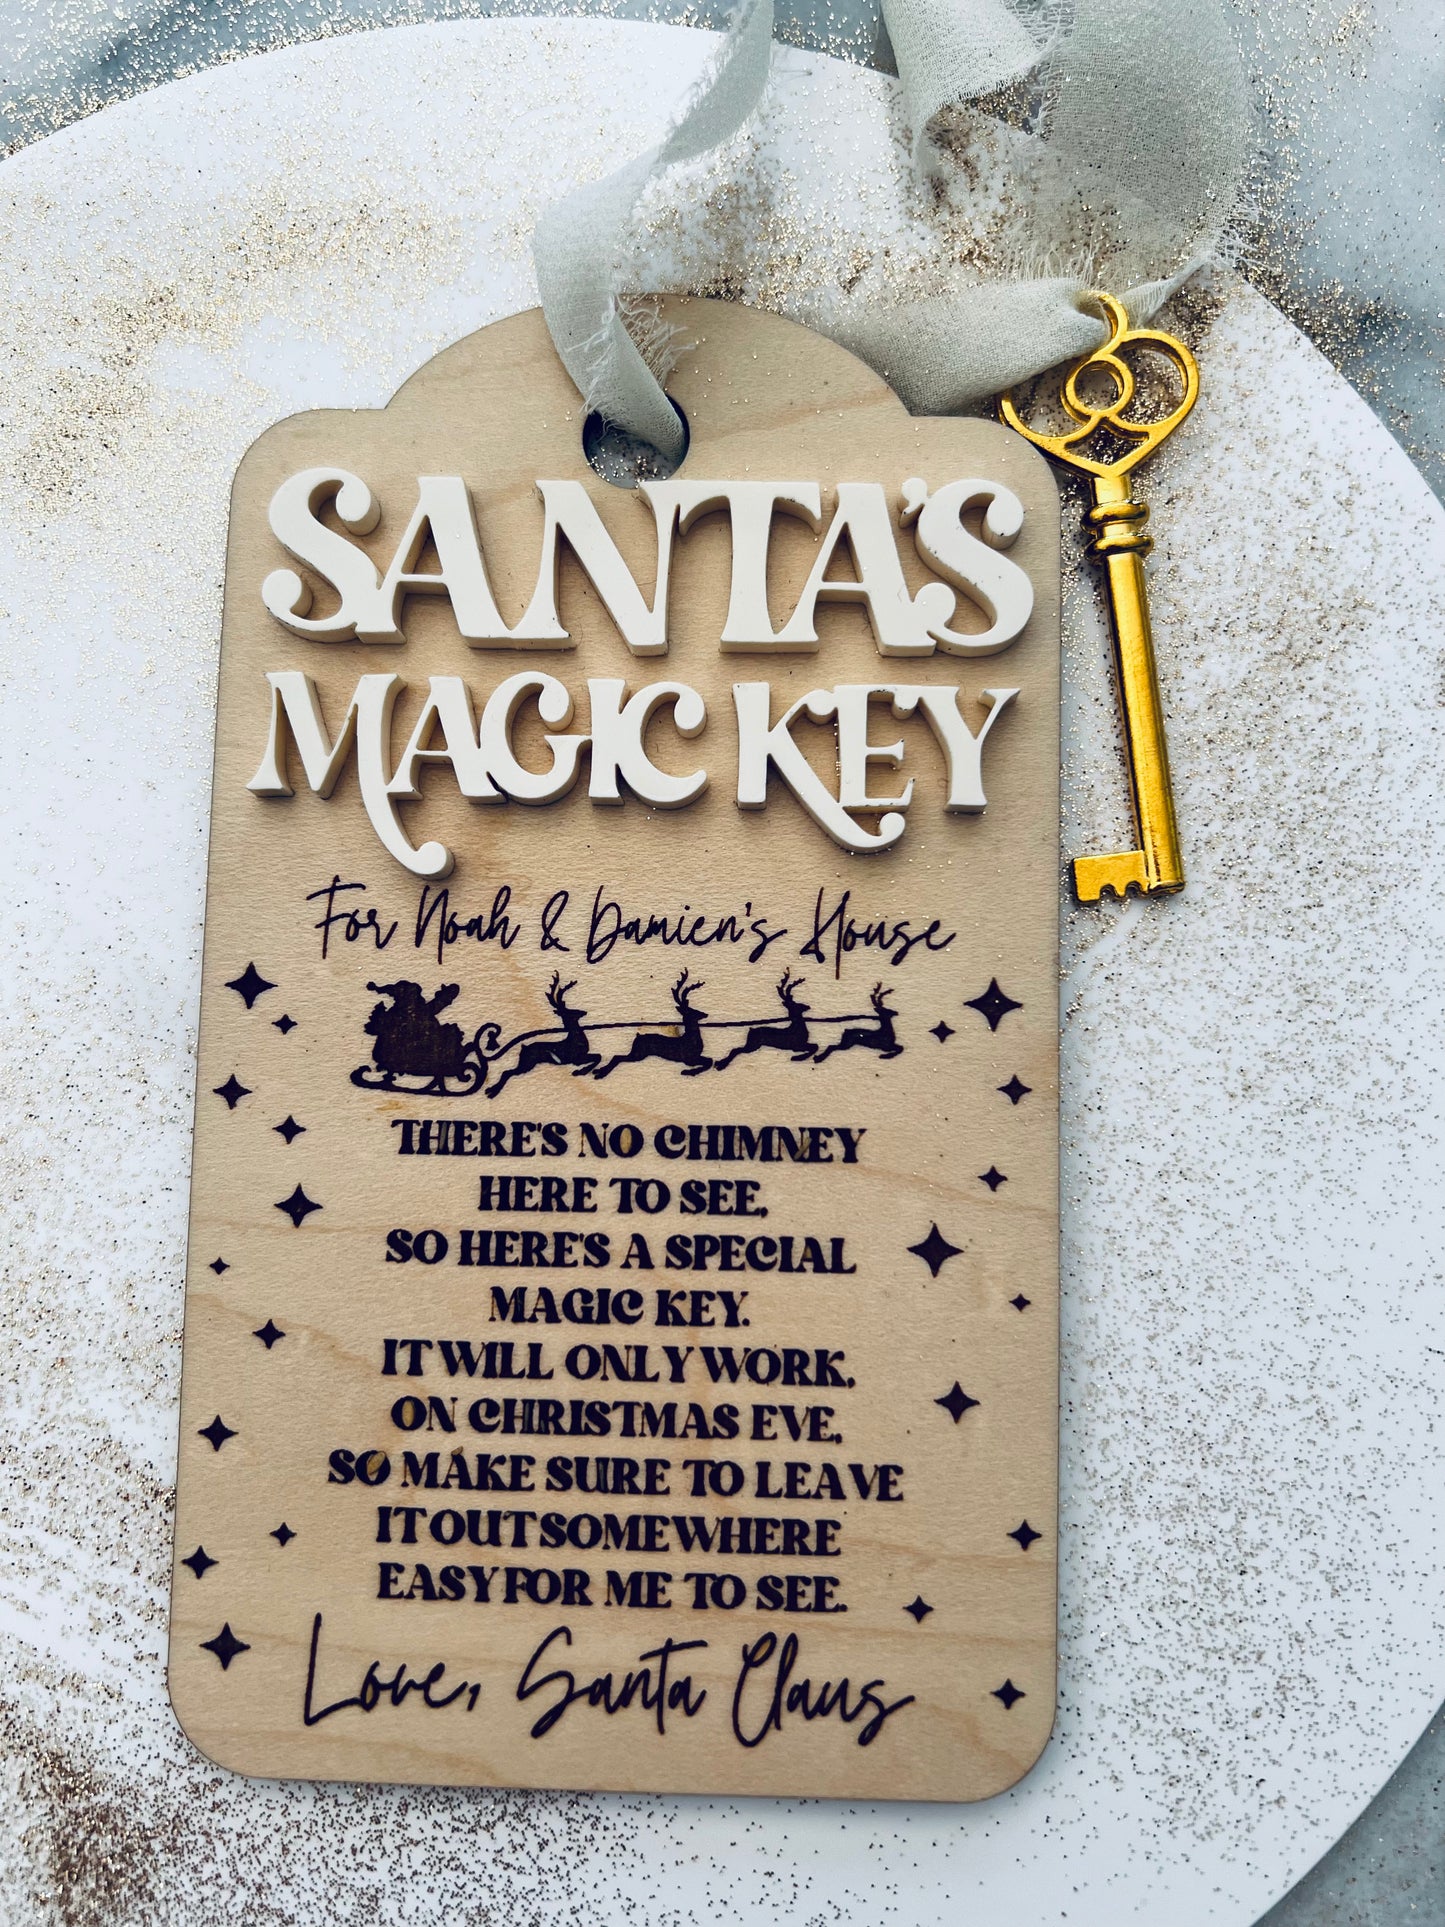 Santa’s magic key